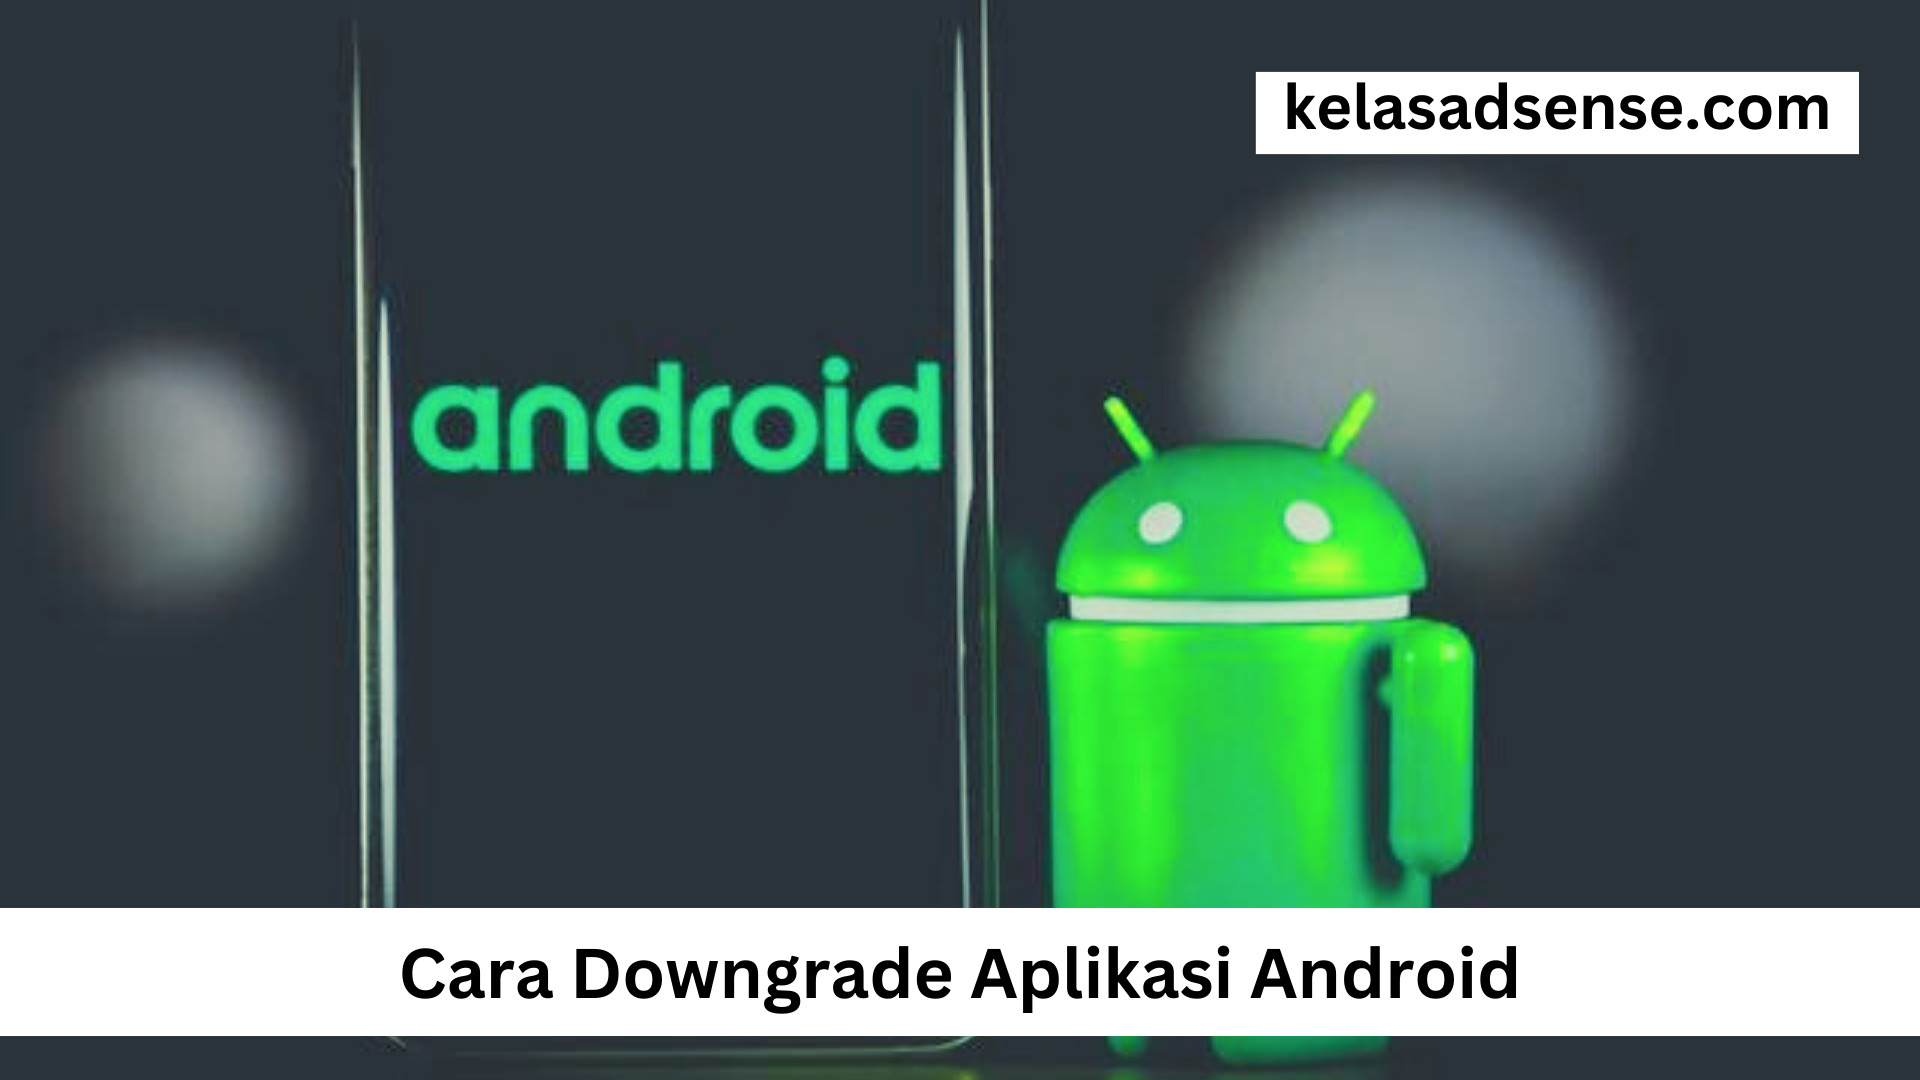 Cara Downgrade Aplikasi Android